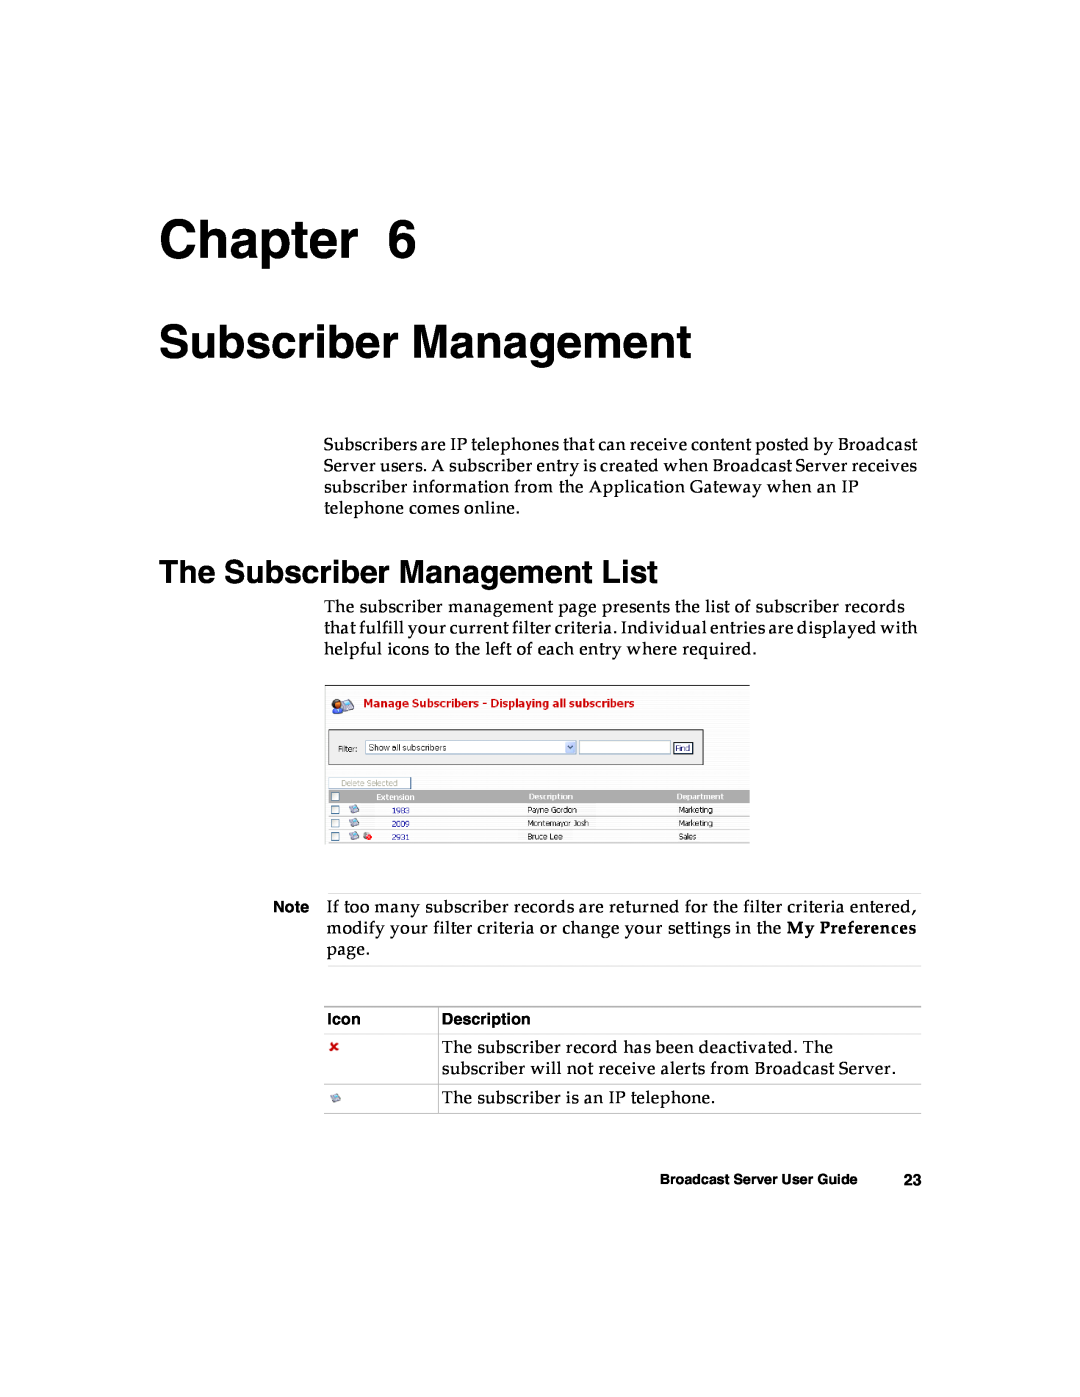 Nortel Networks Broadcast Server warranty The Subscriber Management List, Chapter 